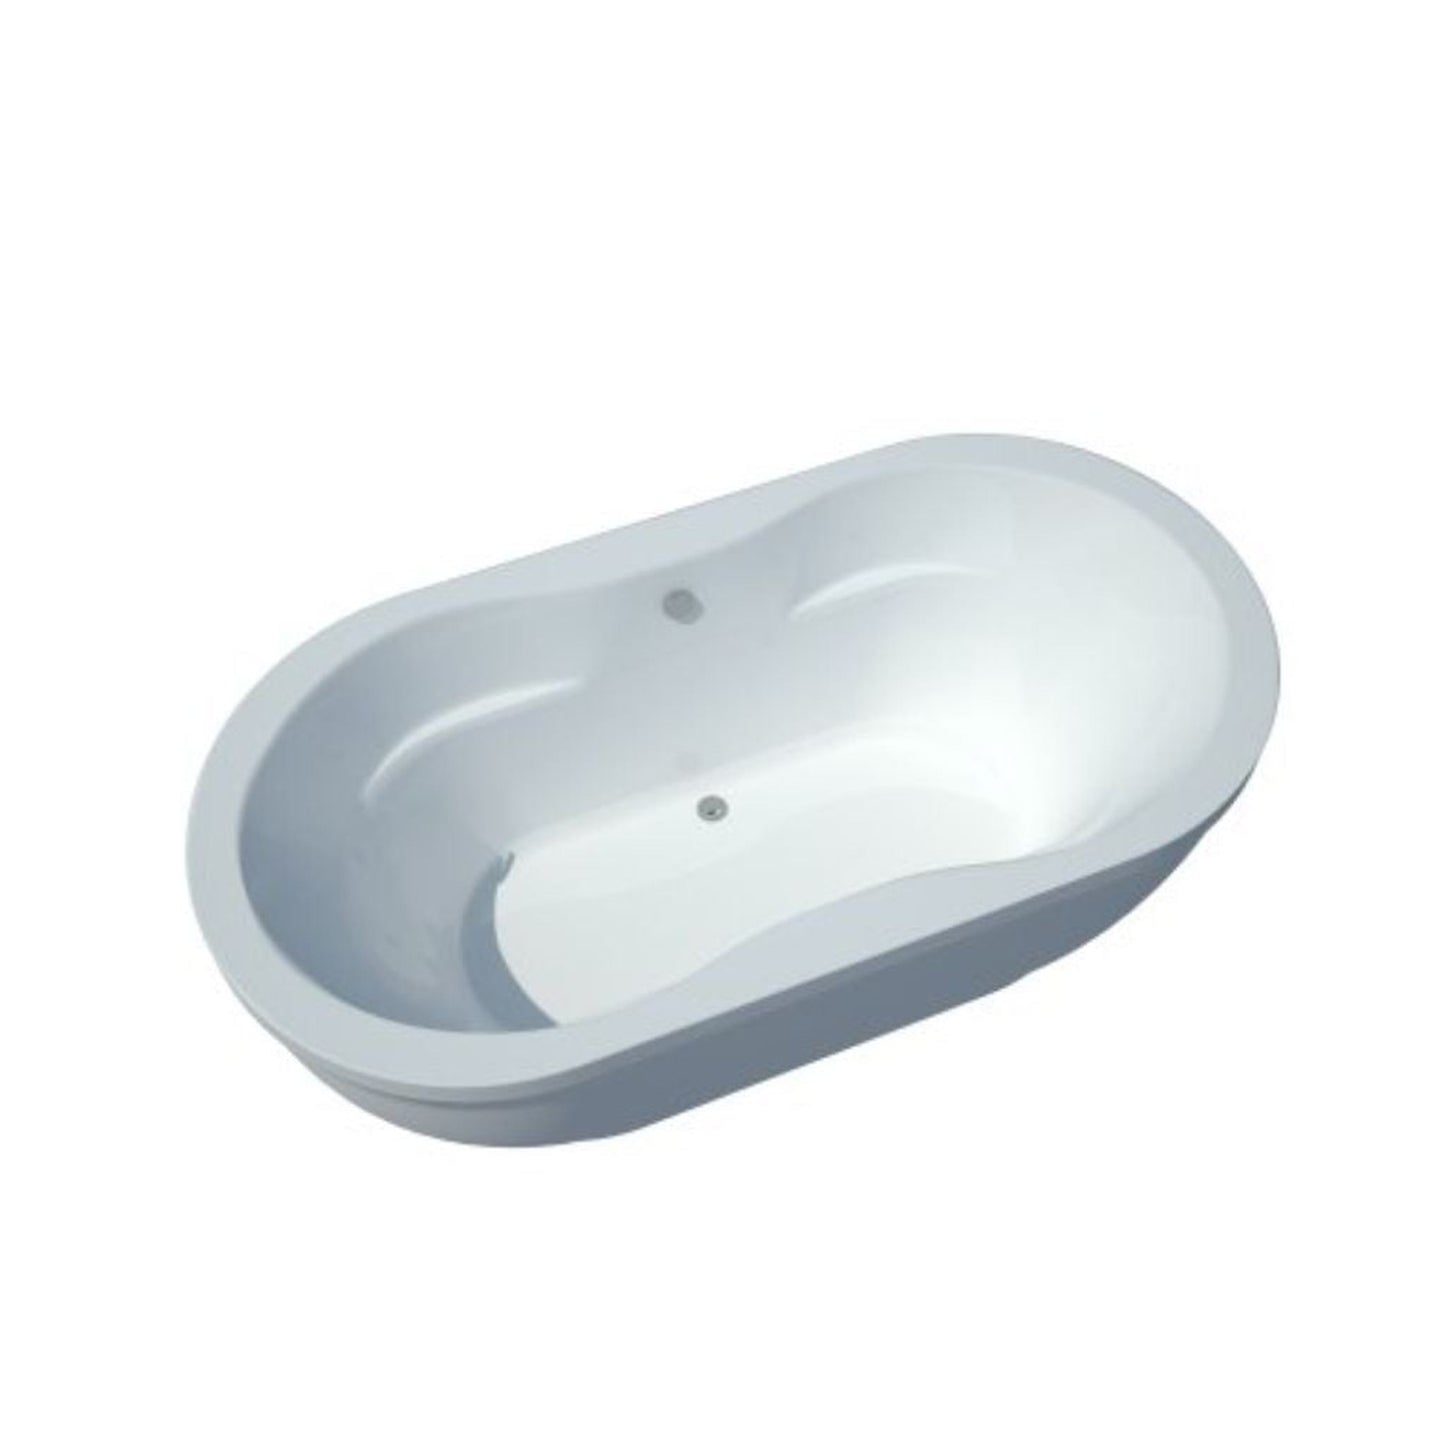 Atlantis Whirlpools Embrace 34" x 71" White Oval Freestanding Acrylic Soaker Bathtub